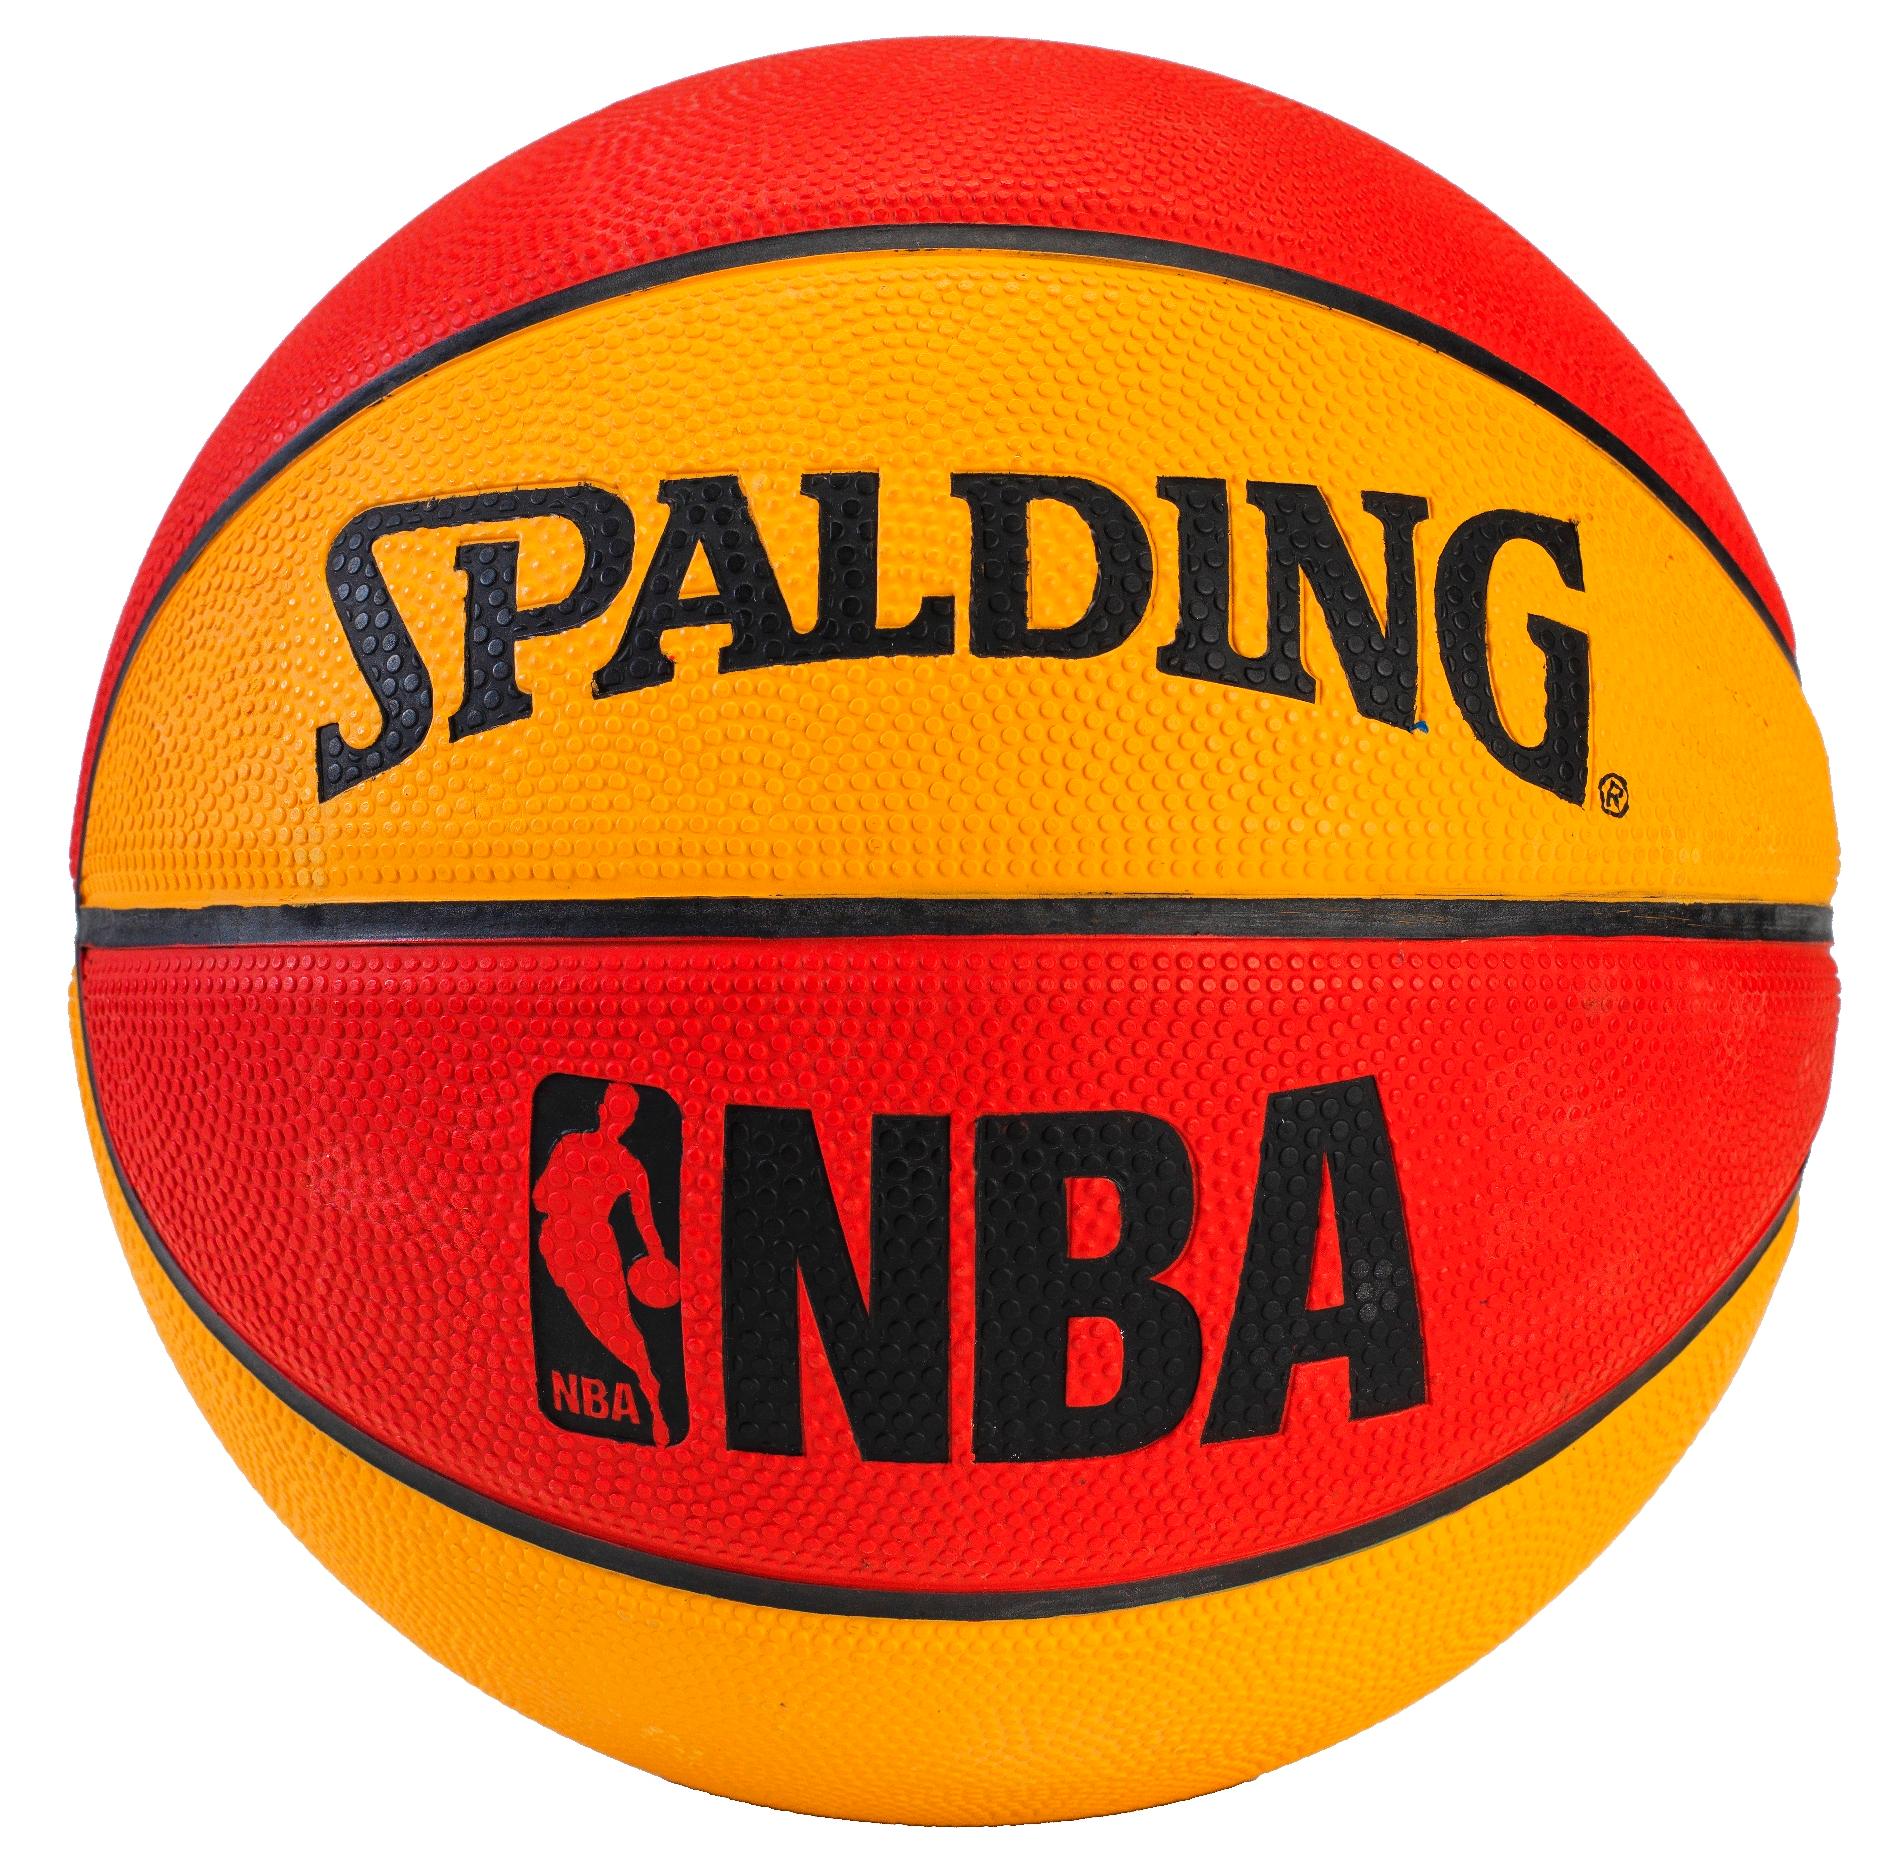 UPC 029321654686 product image for Spalding Mini NBA Game Ball - SPALDING SPORTS WORLDWIDE | upcitemdb.com